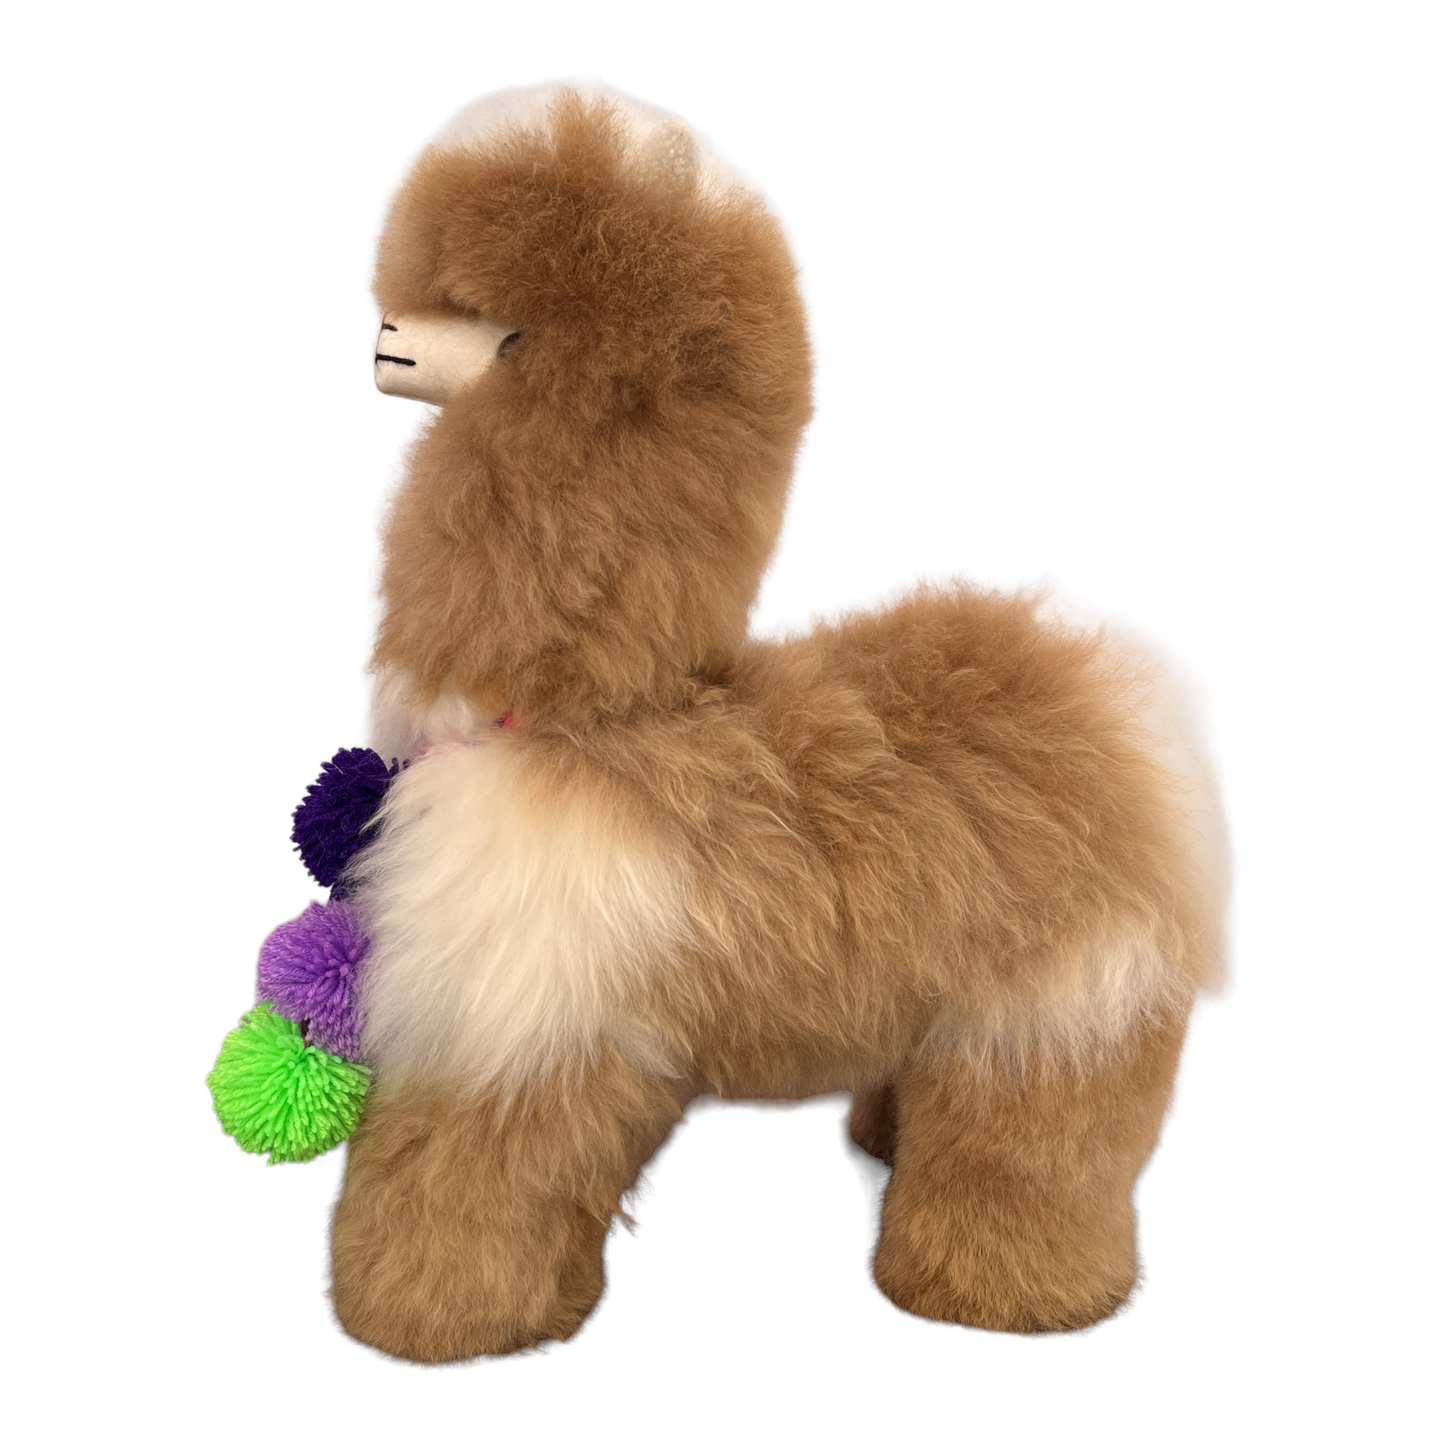 Suri Alpaca stuffed animals-Giant size